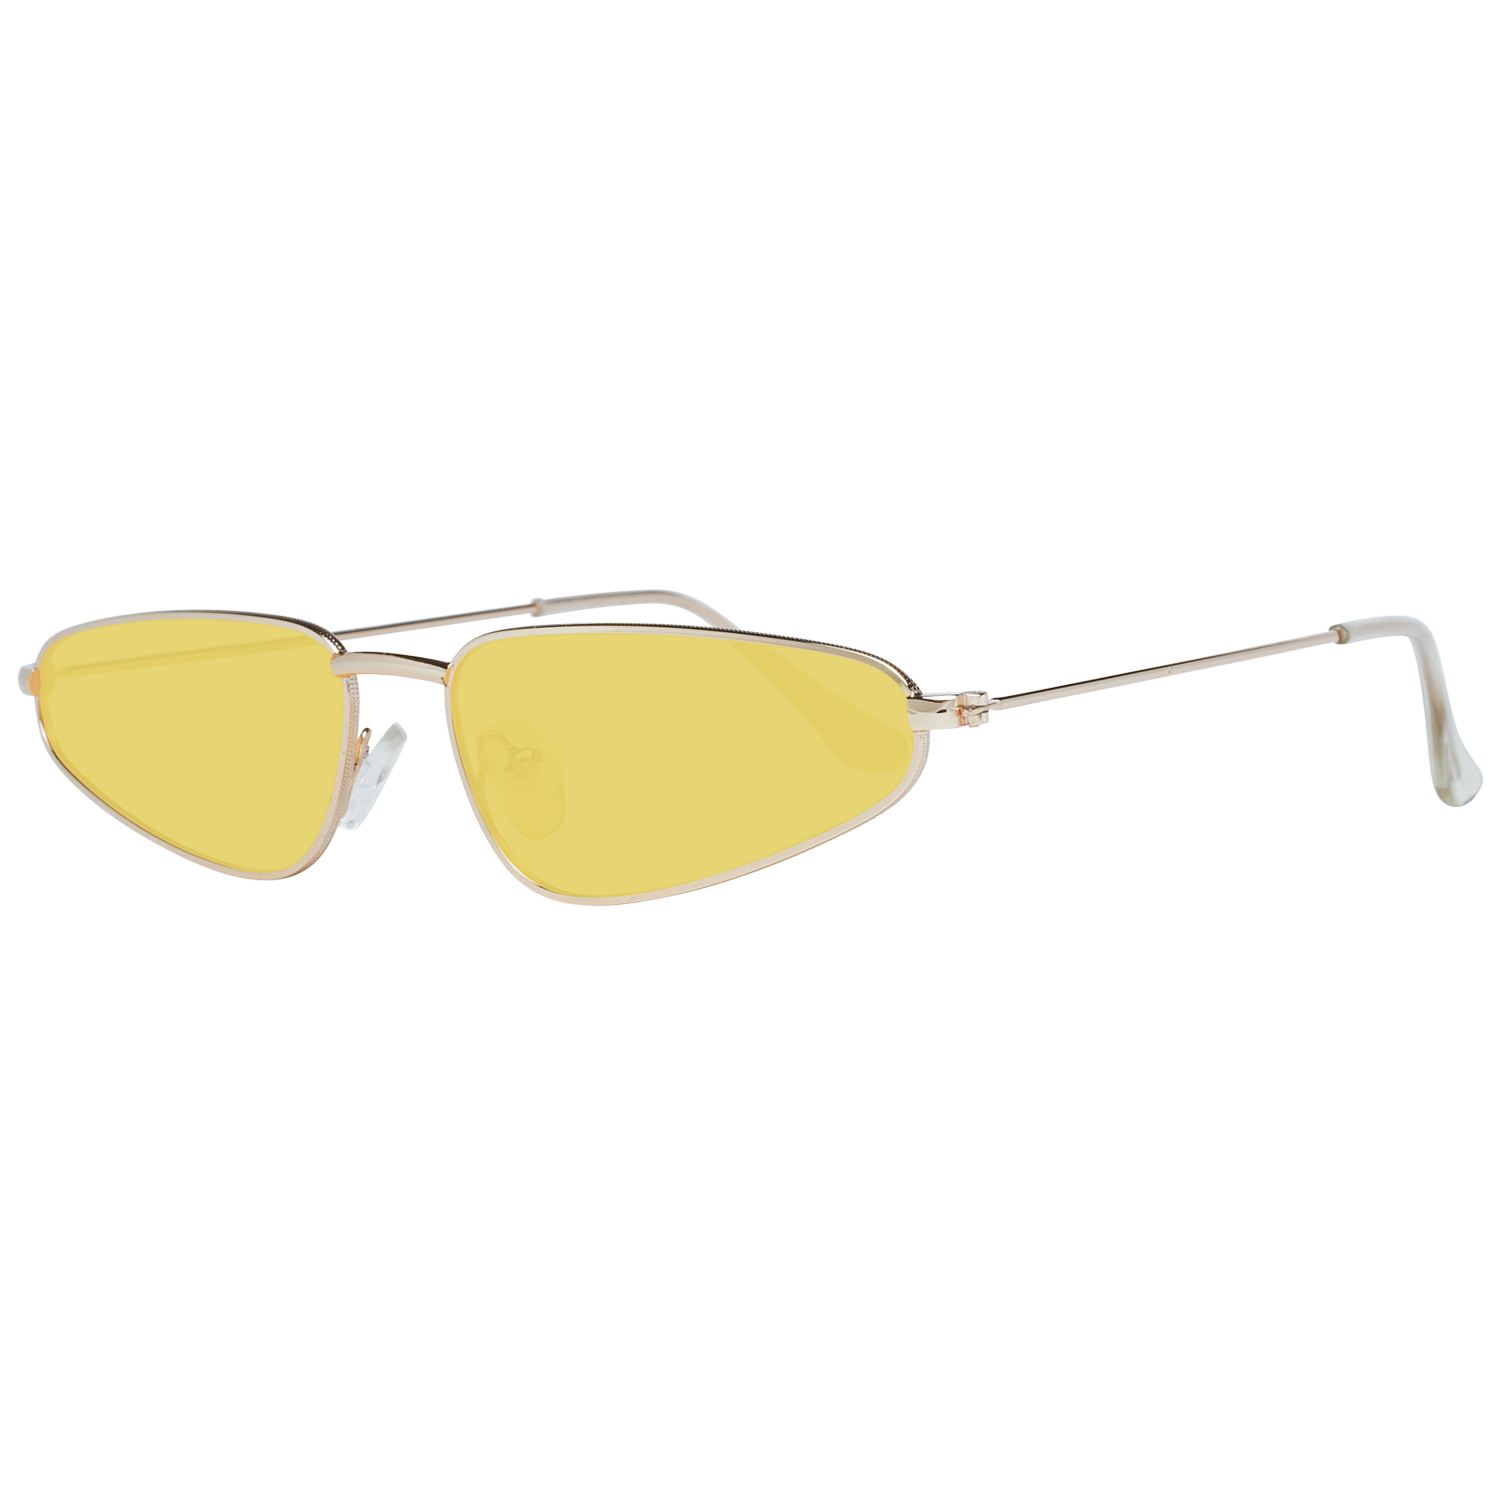 Millner Sunglasses Millner Sunglasses 0021104 Gatwick Eyeglasses Eyewear UK USA Australia 